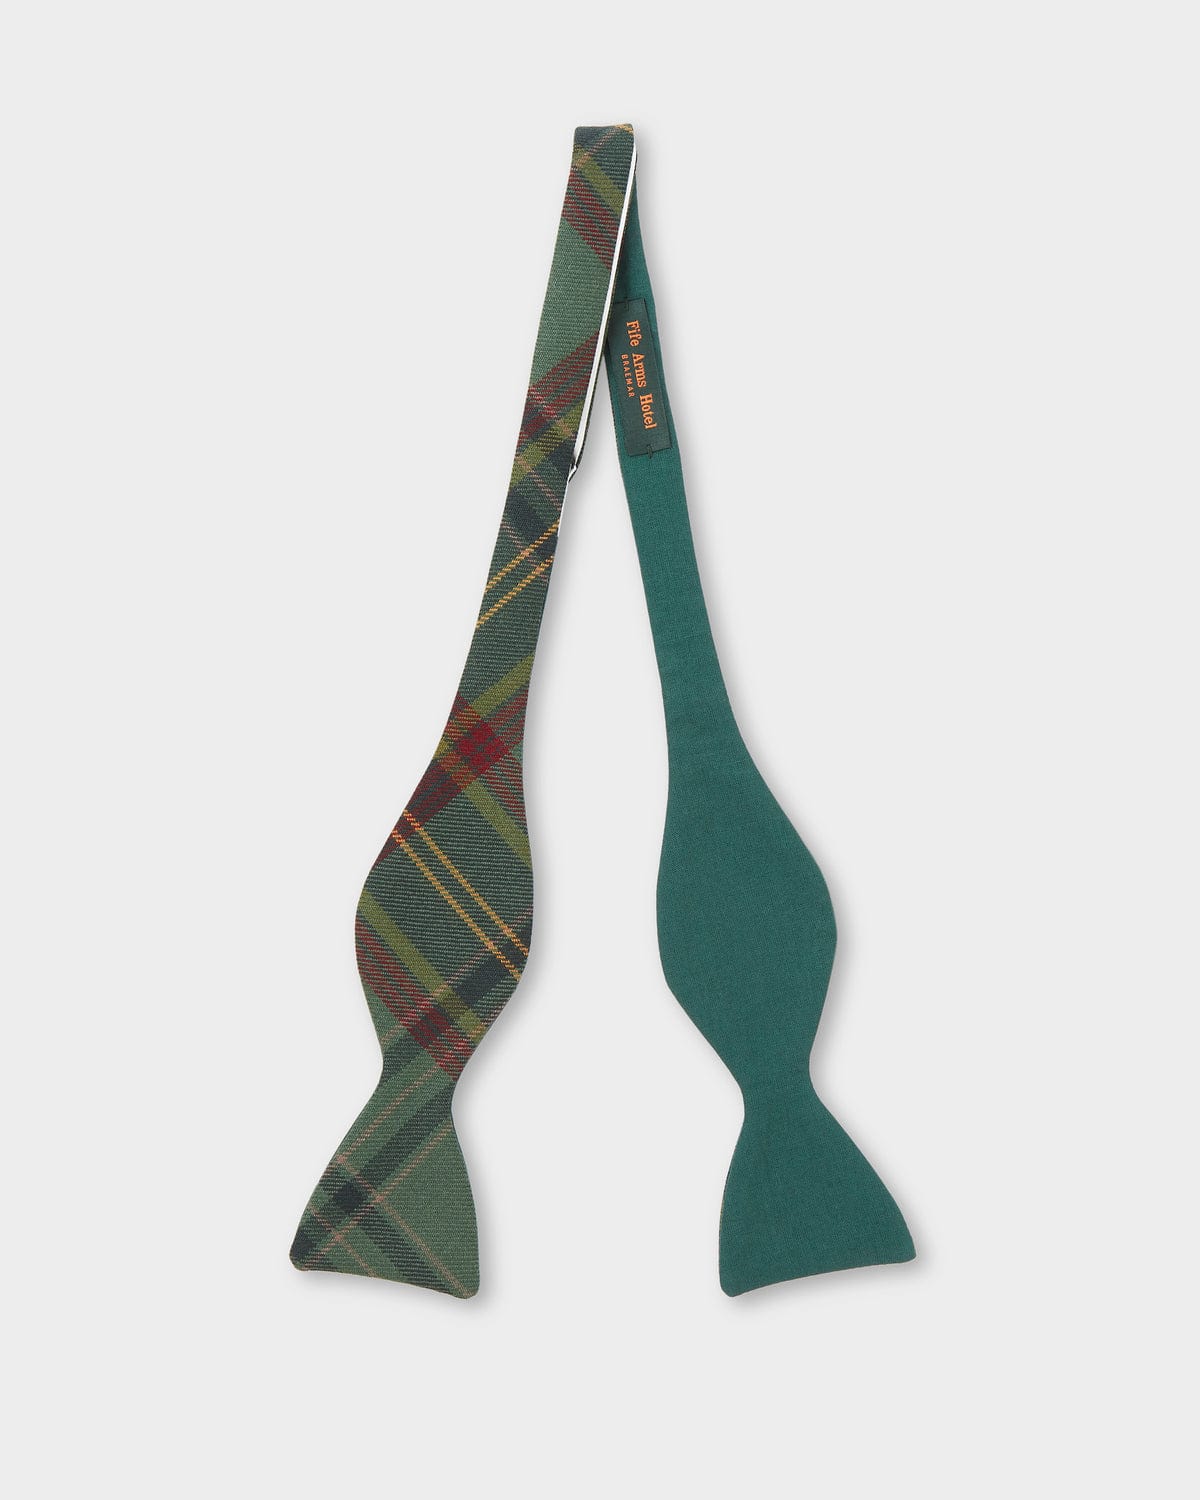 Bow Tie | Tartan or Tweed | The Fife Arms – The Fife Arms Shop